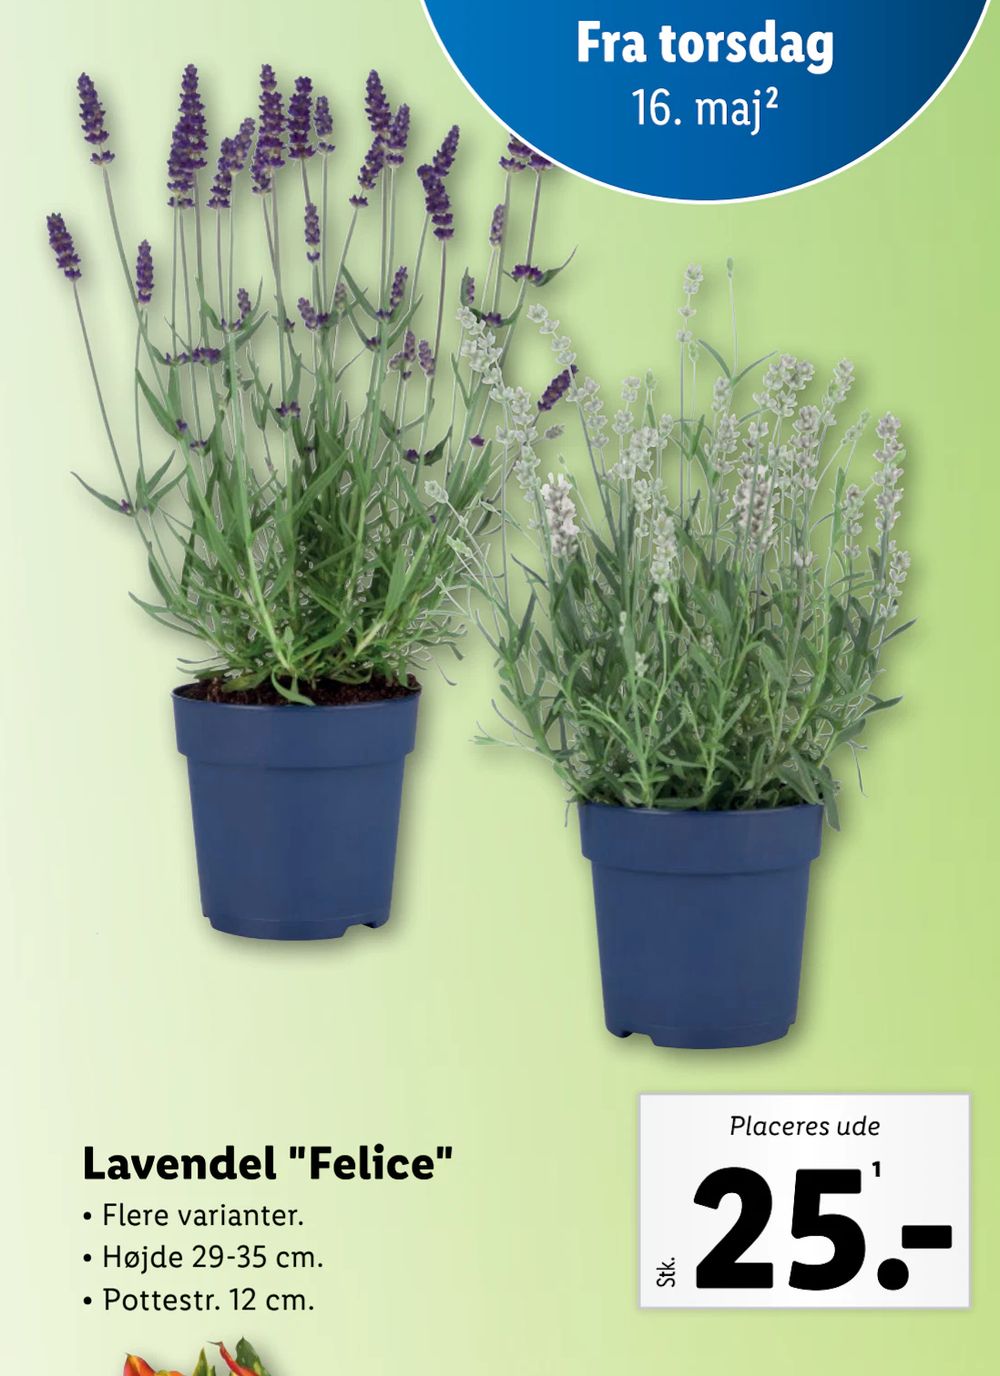 Tilbud på Lavendel "Felice" fra Lidl til 25 kr.